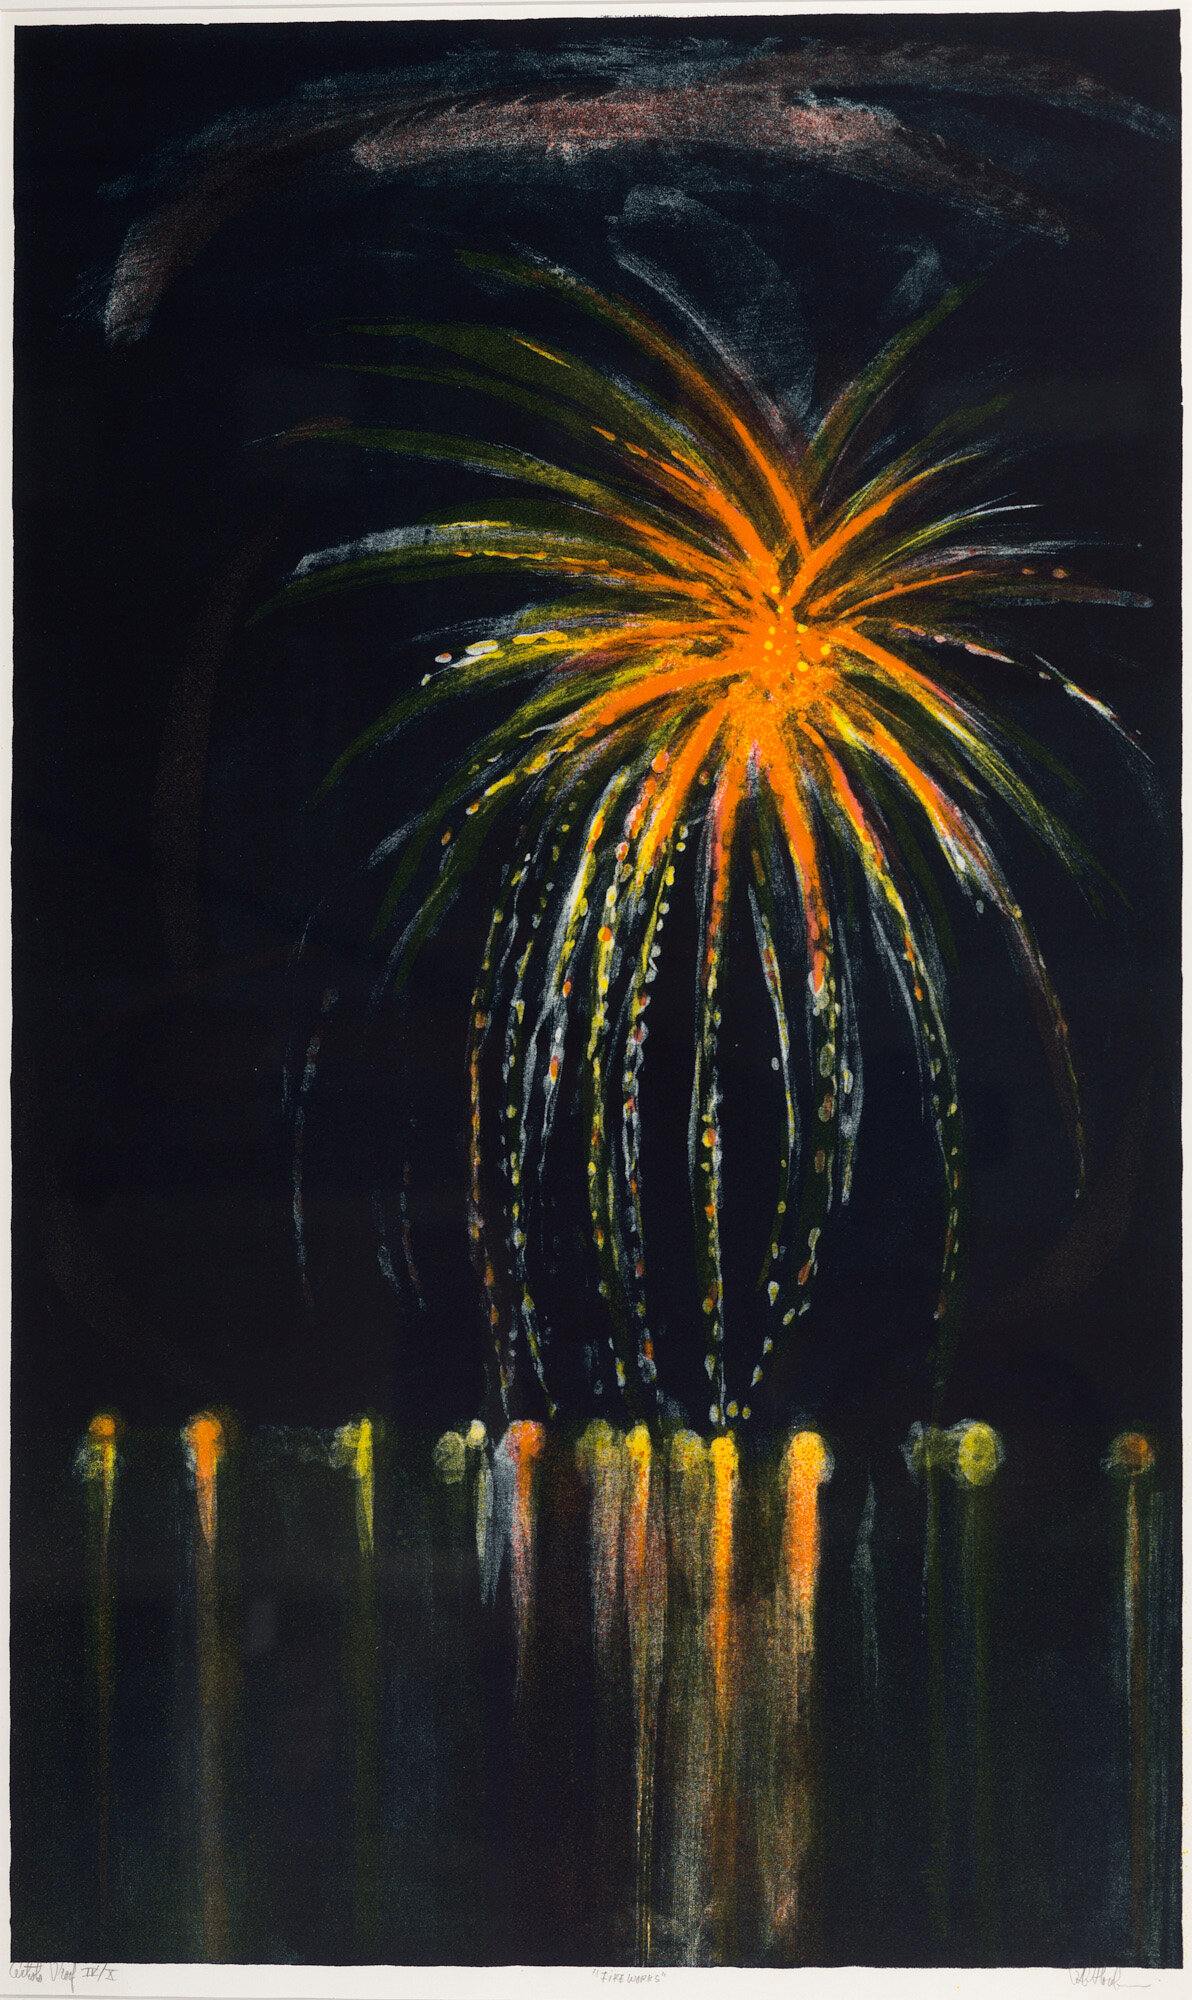  Richard Aberle Florsheim (1916-1979)   Fireworks   Lithograph, A.P., IV/V, c. 1960, 31” x 18 ¼”   Gift of Sylvan Cole (1918-2005)  